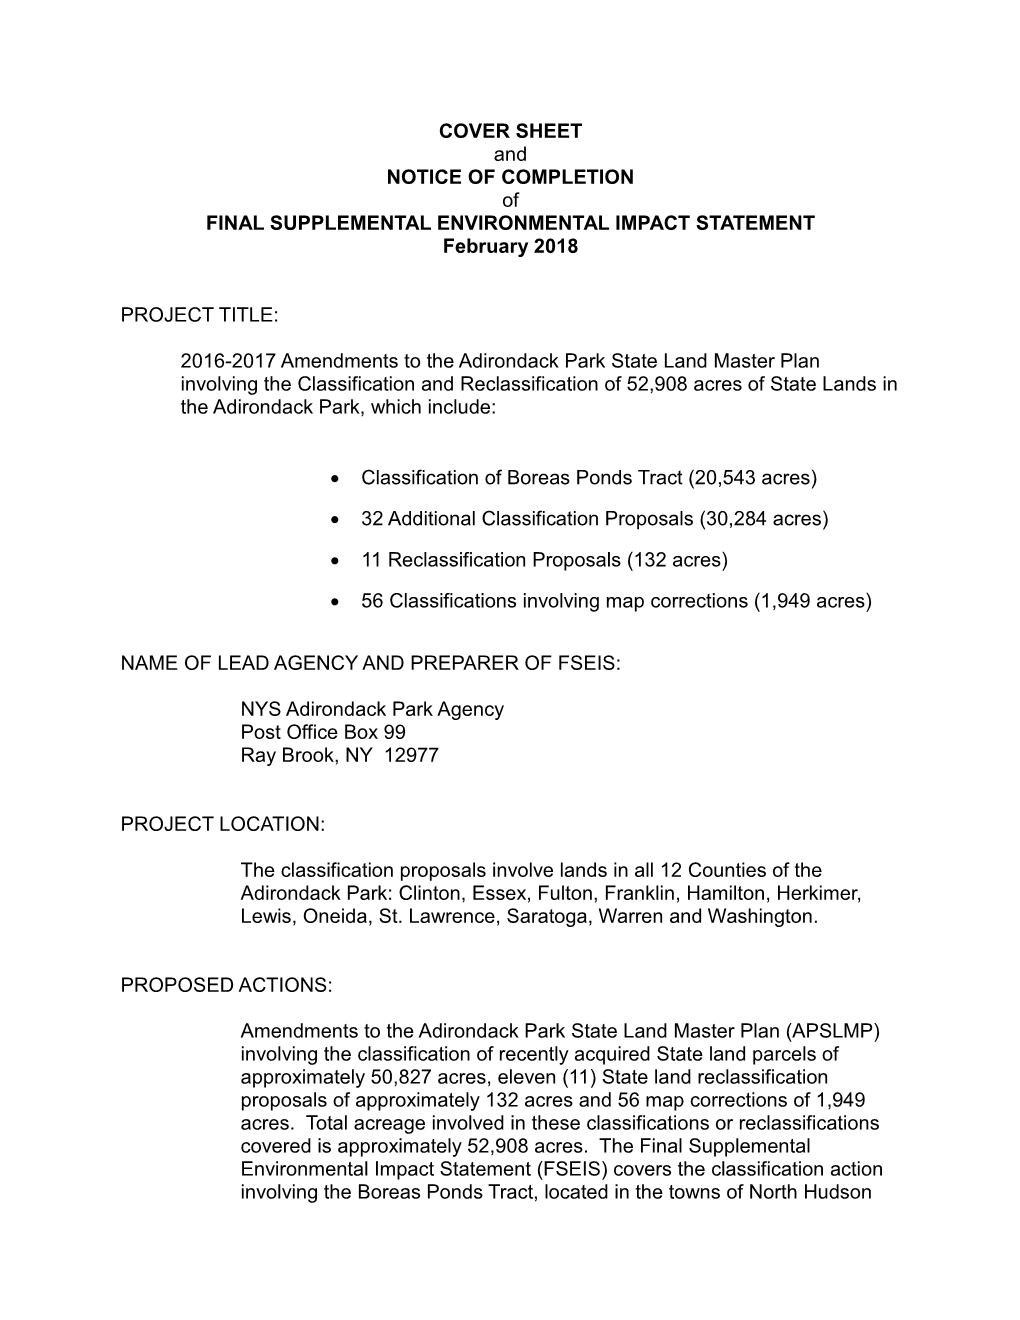 SLMP Final Environmental Impact Statement